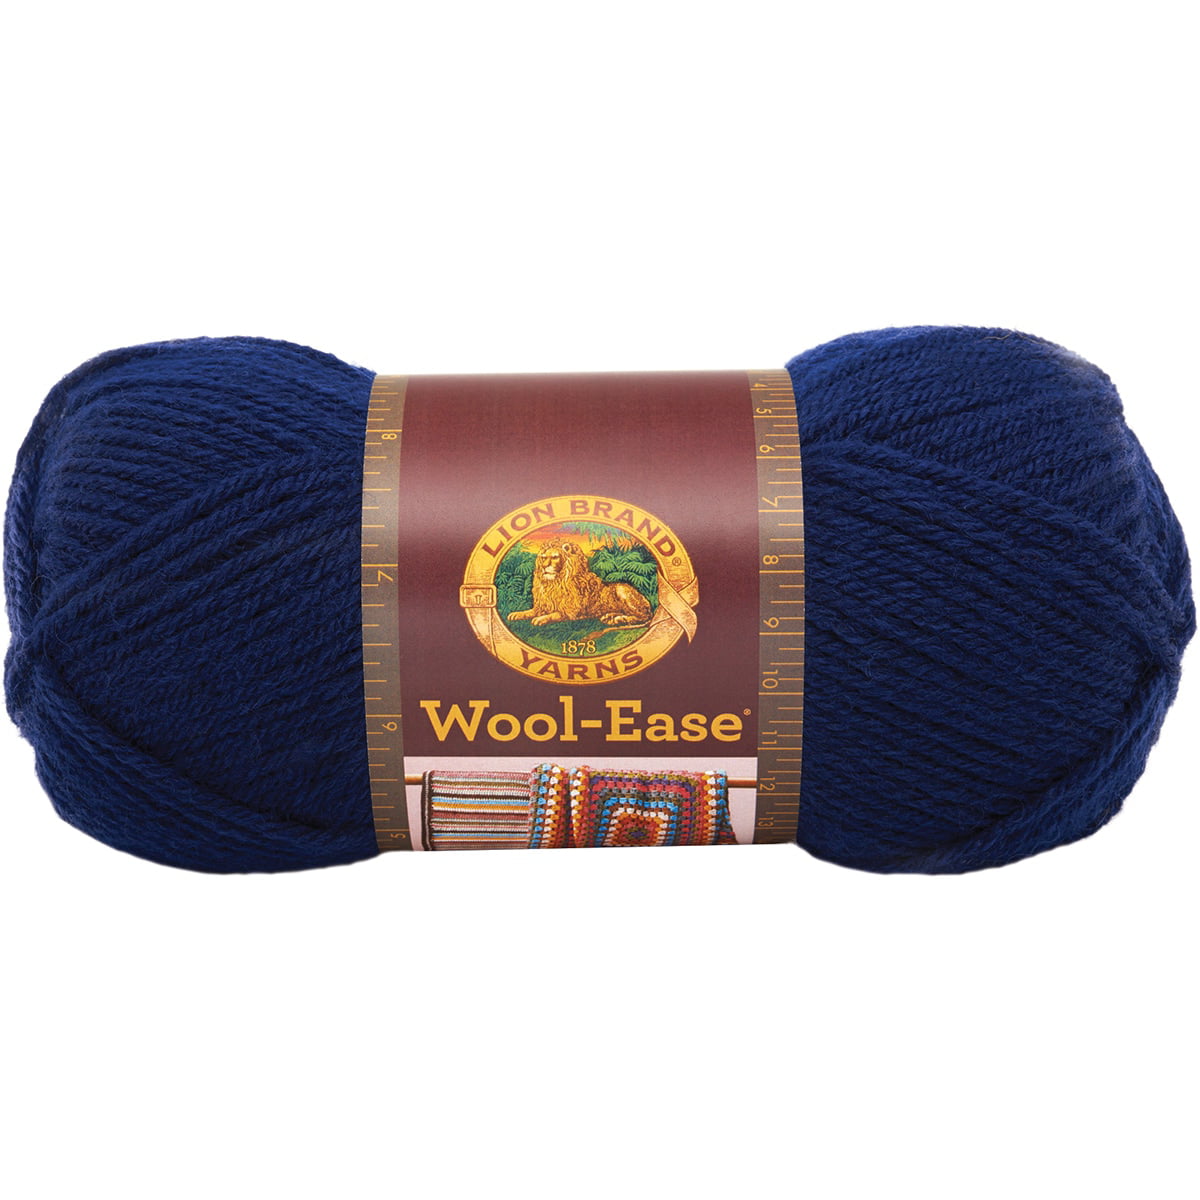 Lion Brand Yarn 620-139 Wool-Ease Yarn, One Size, Dark Rose Heather 